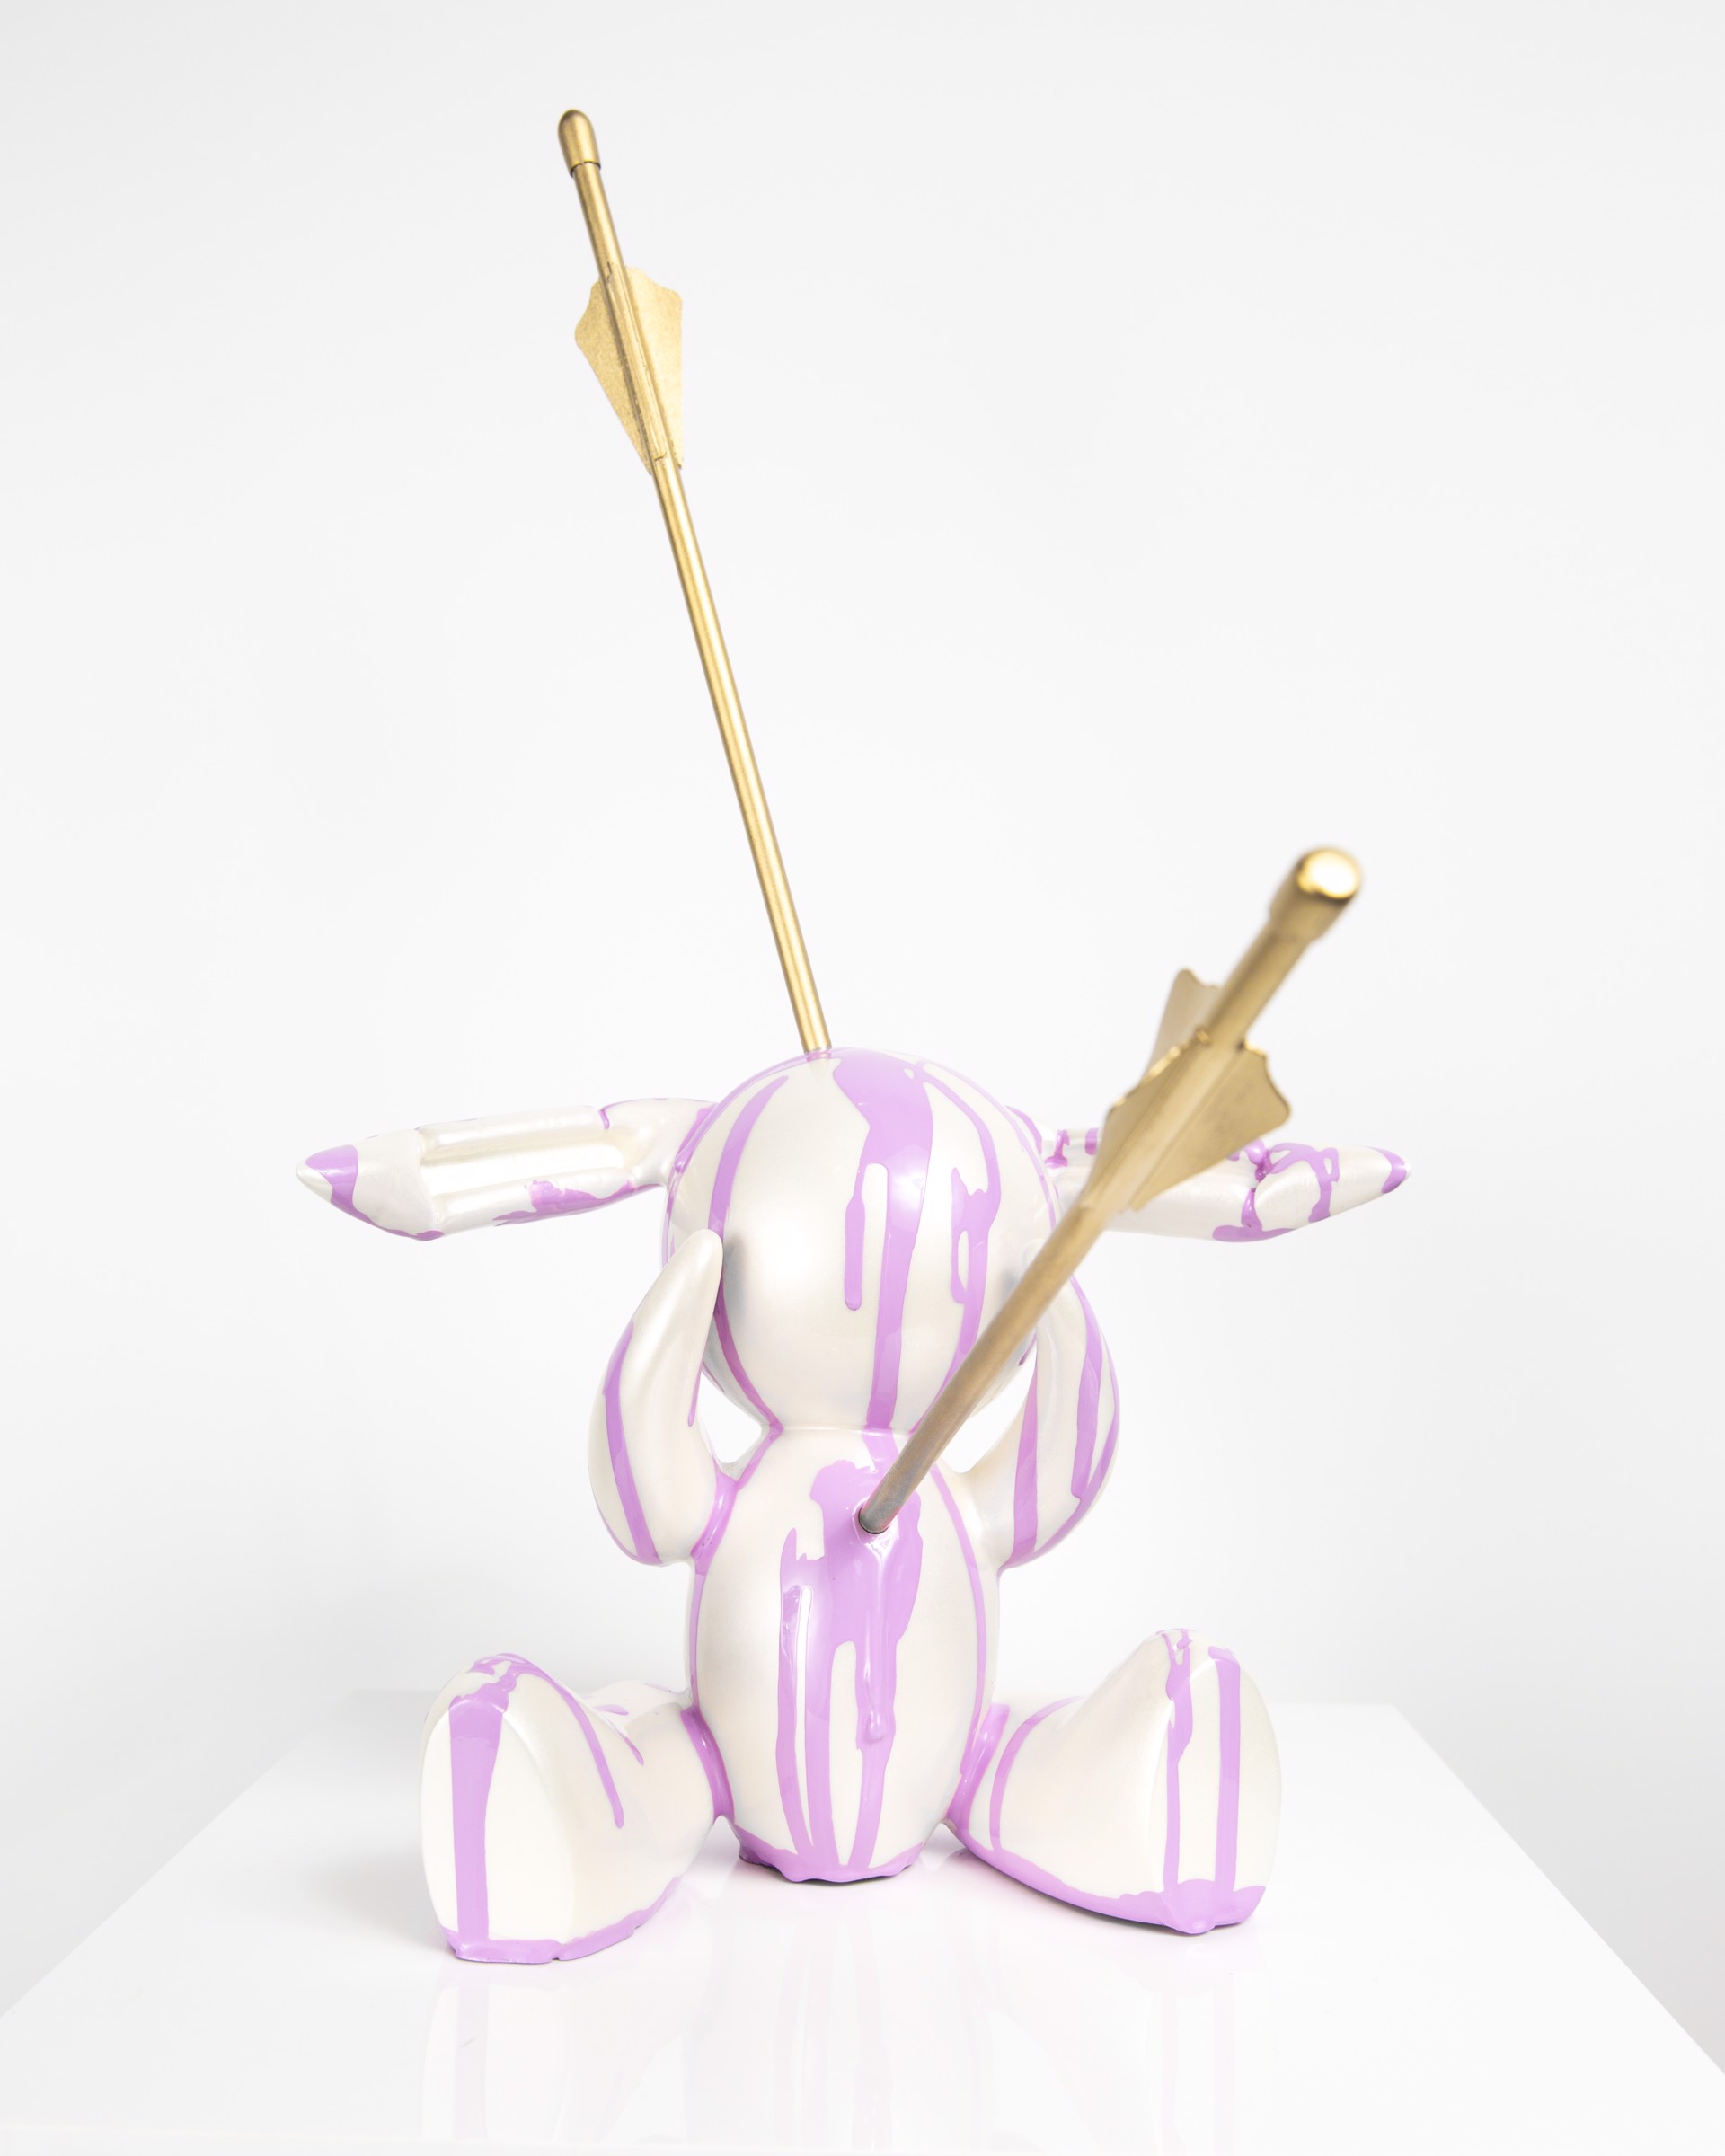 Follow the White Balloon Rabbit - Series 1 (Lavender) by Joe Suzuki